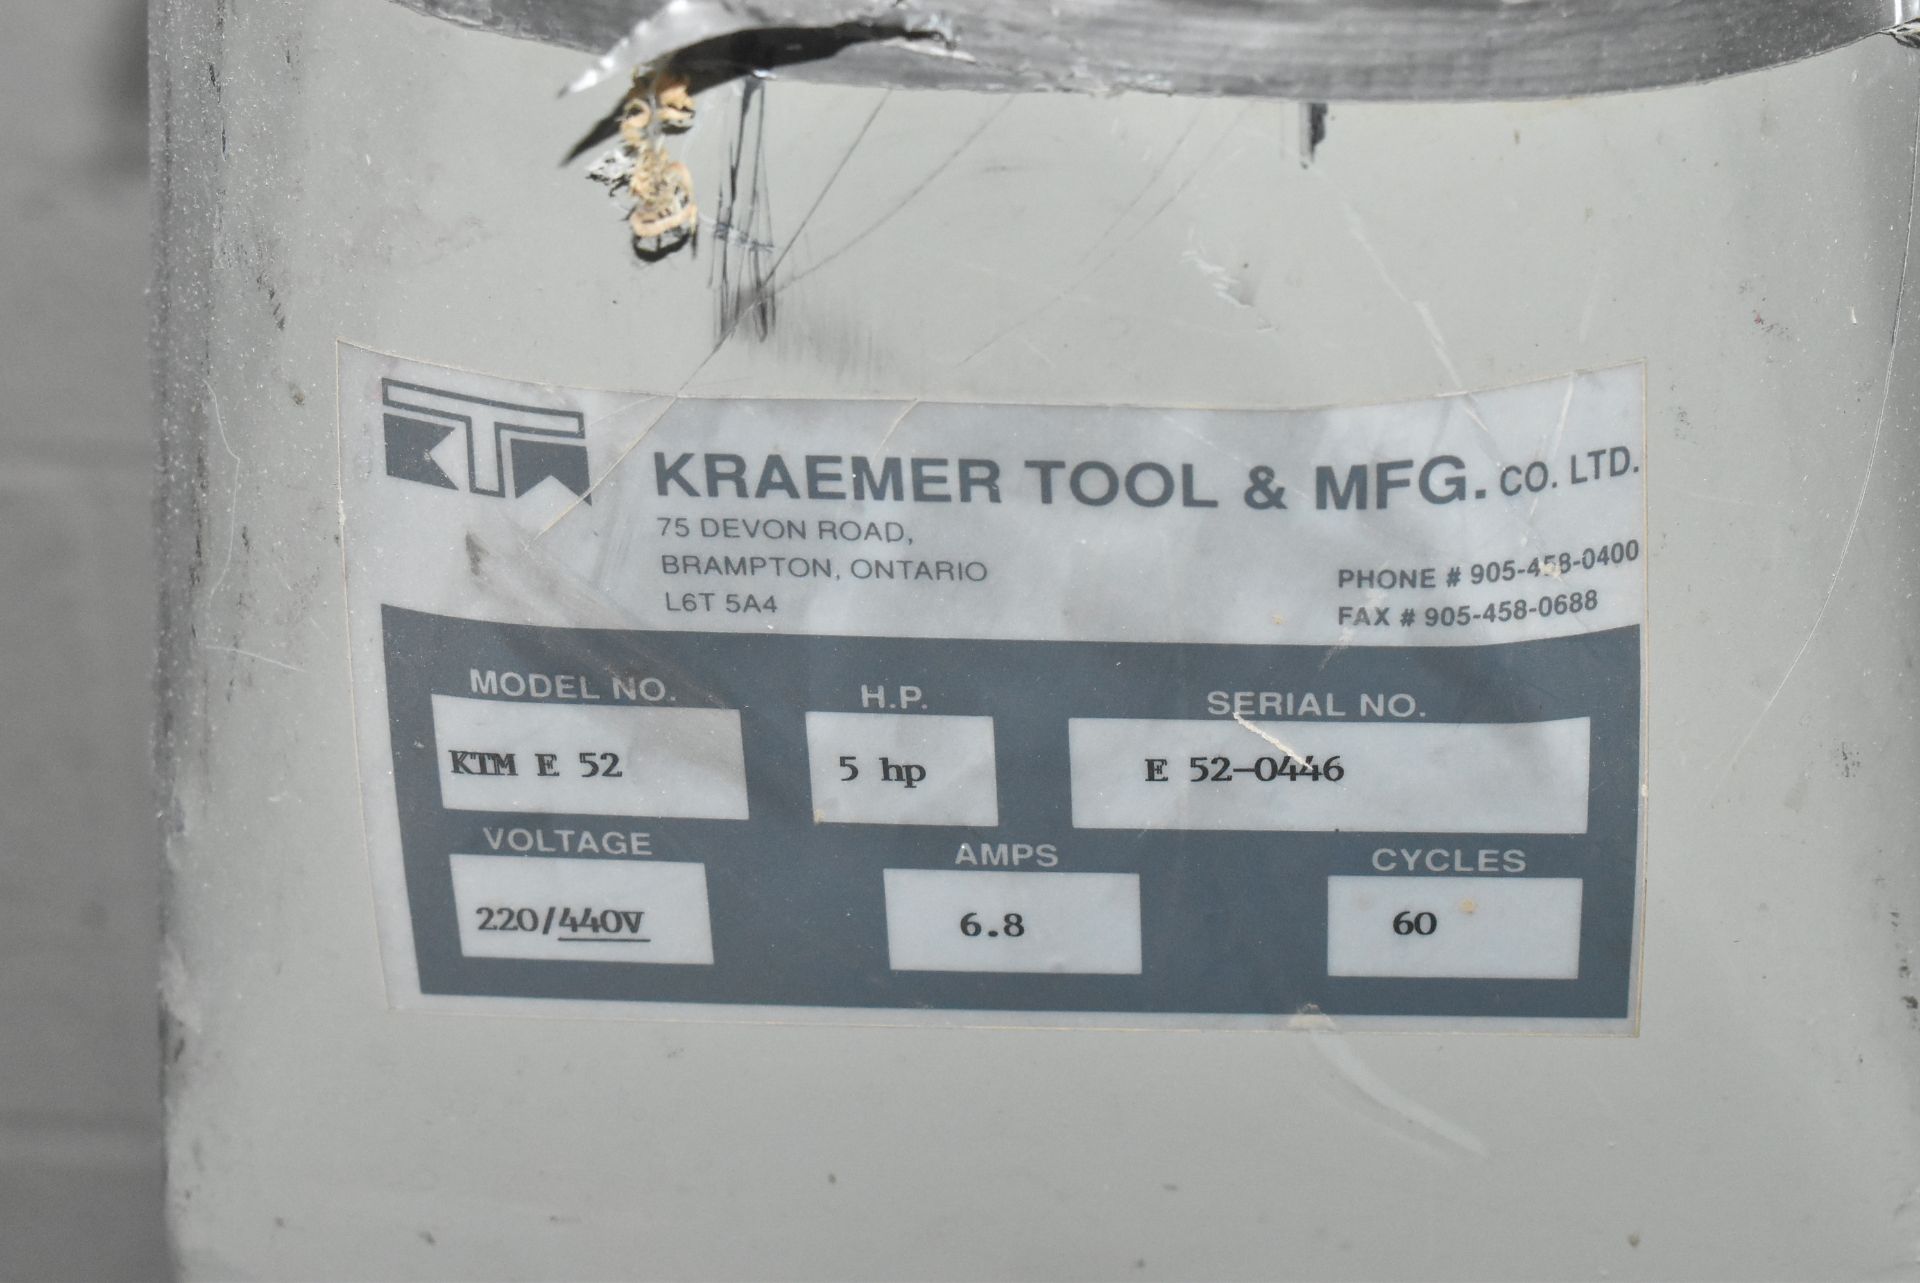 KRAEMER KTM E 52 5 HP PORTABLE TWIN BAG DUST COLLECTOR, S/N: E52-0446 - Image 3 of 4